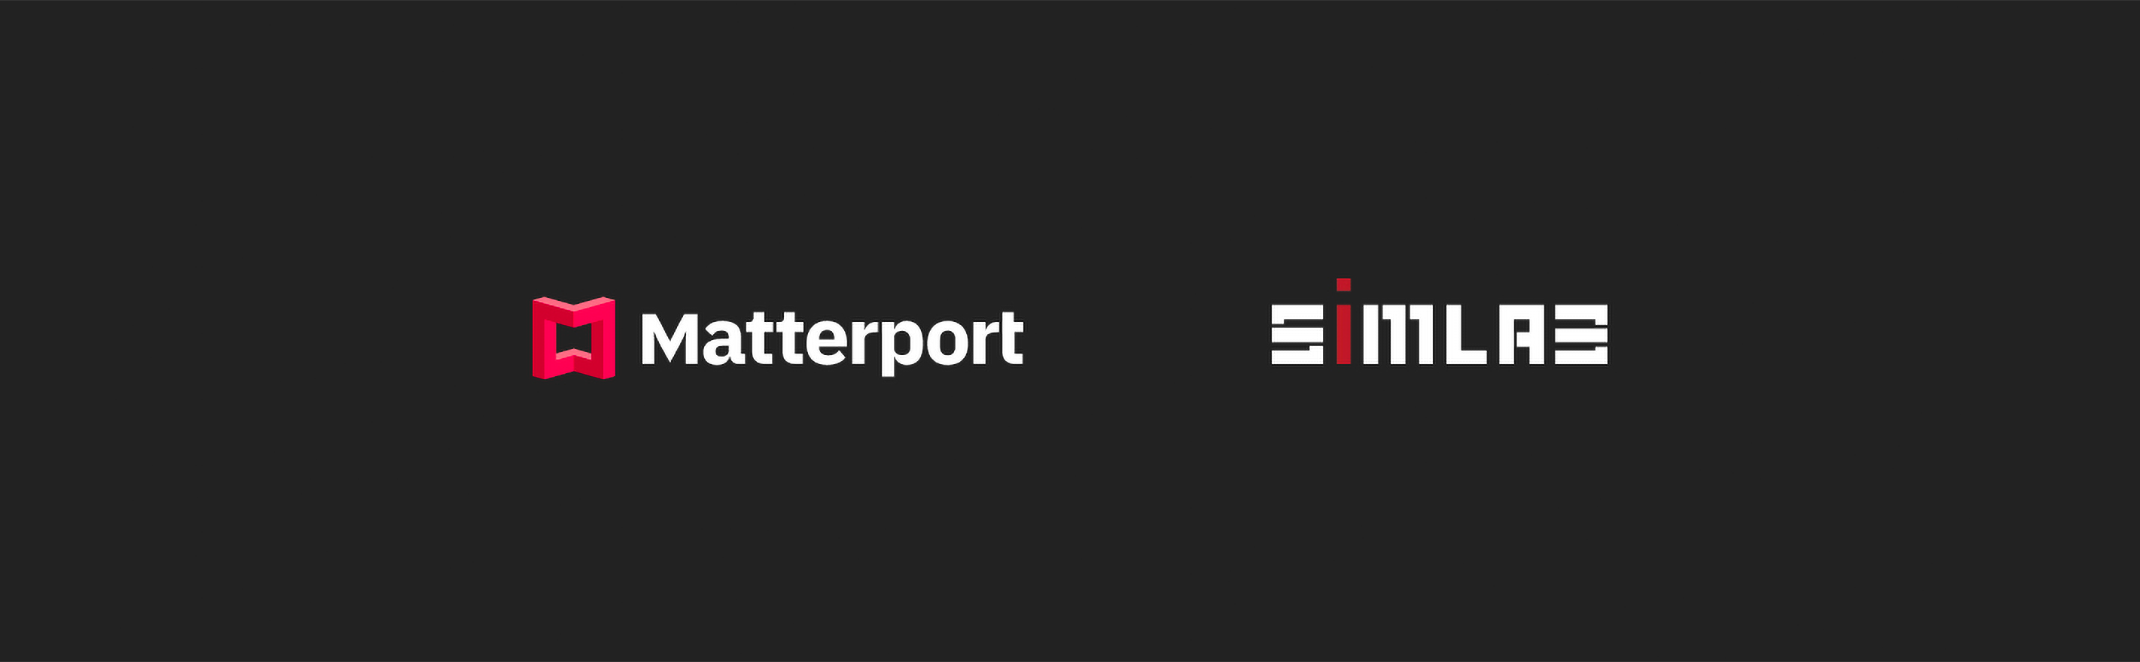 Matterport and Simlab logos